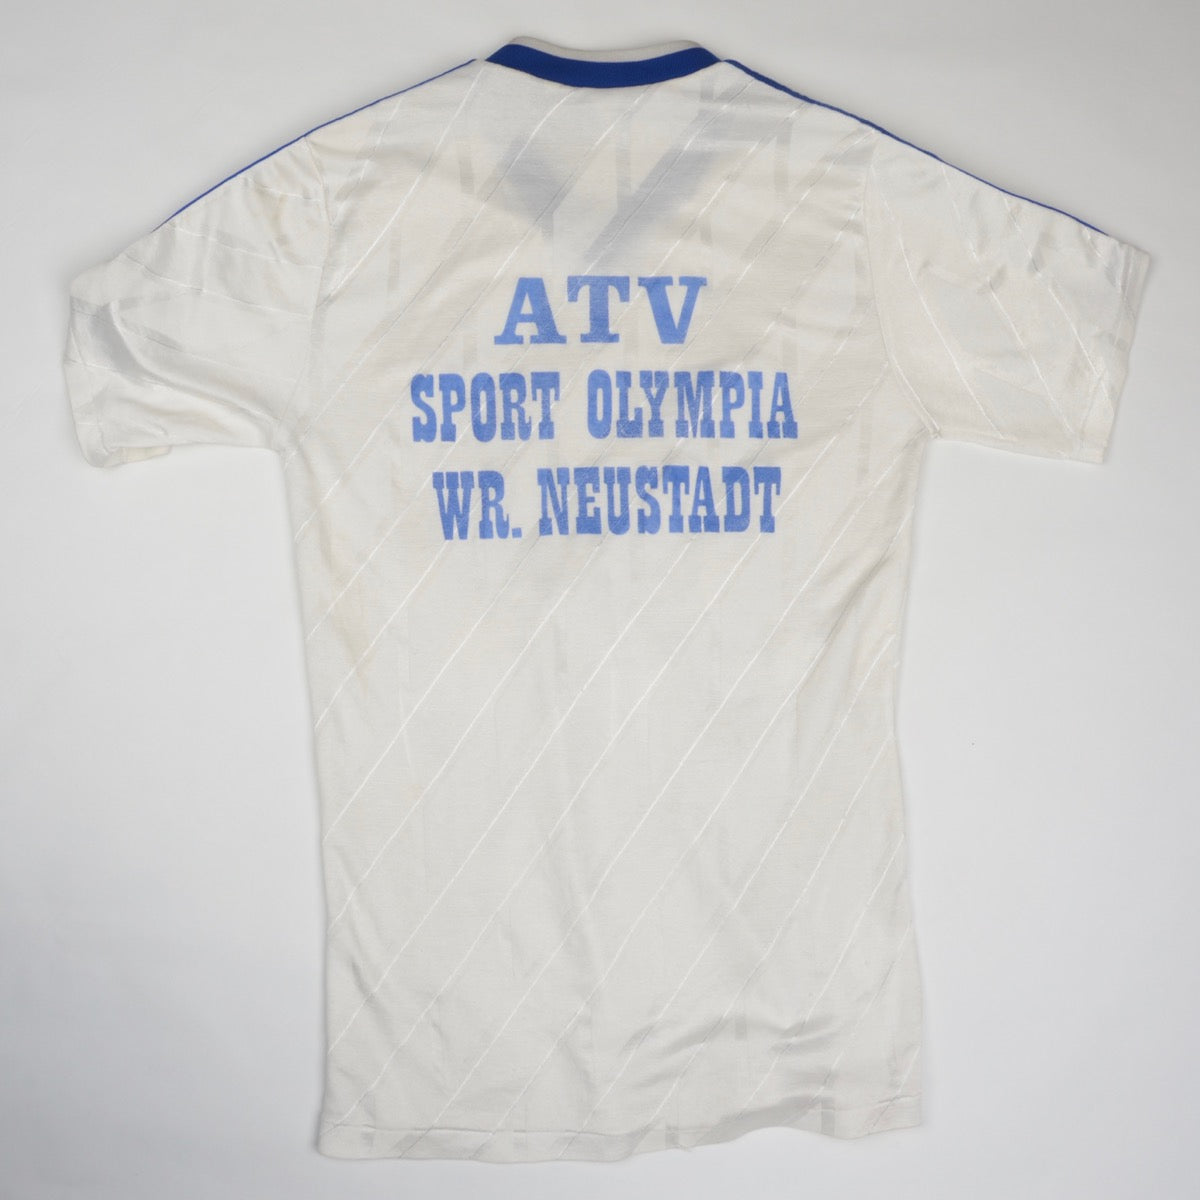 Vintage 80er Jahre Adidas ATV Sport Olympia Trikot Größe D5-6 - weiß